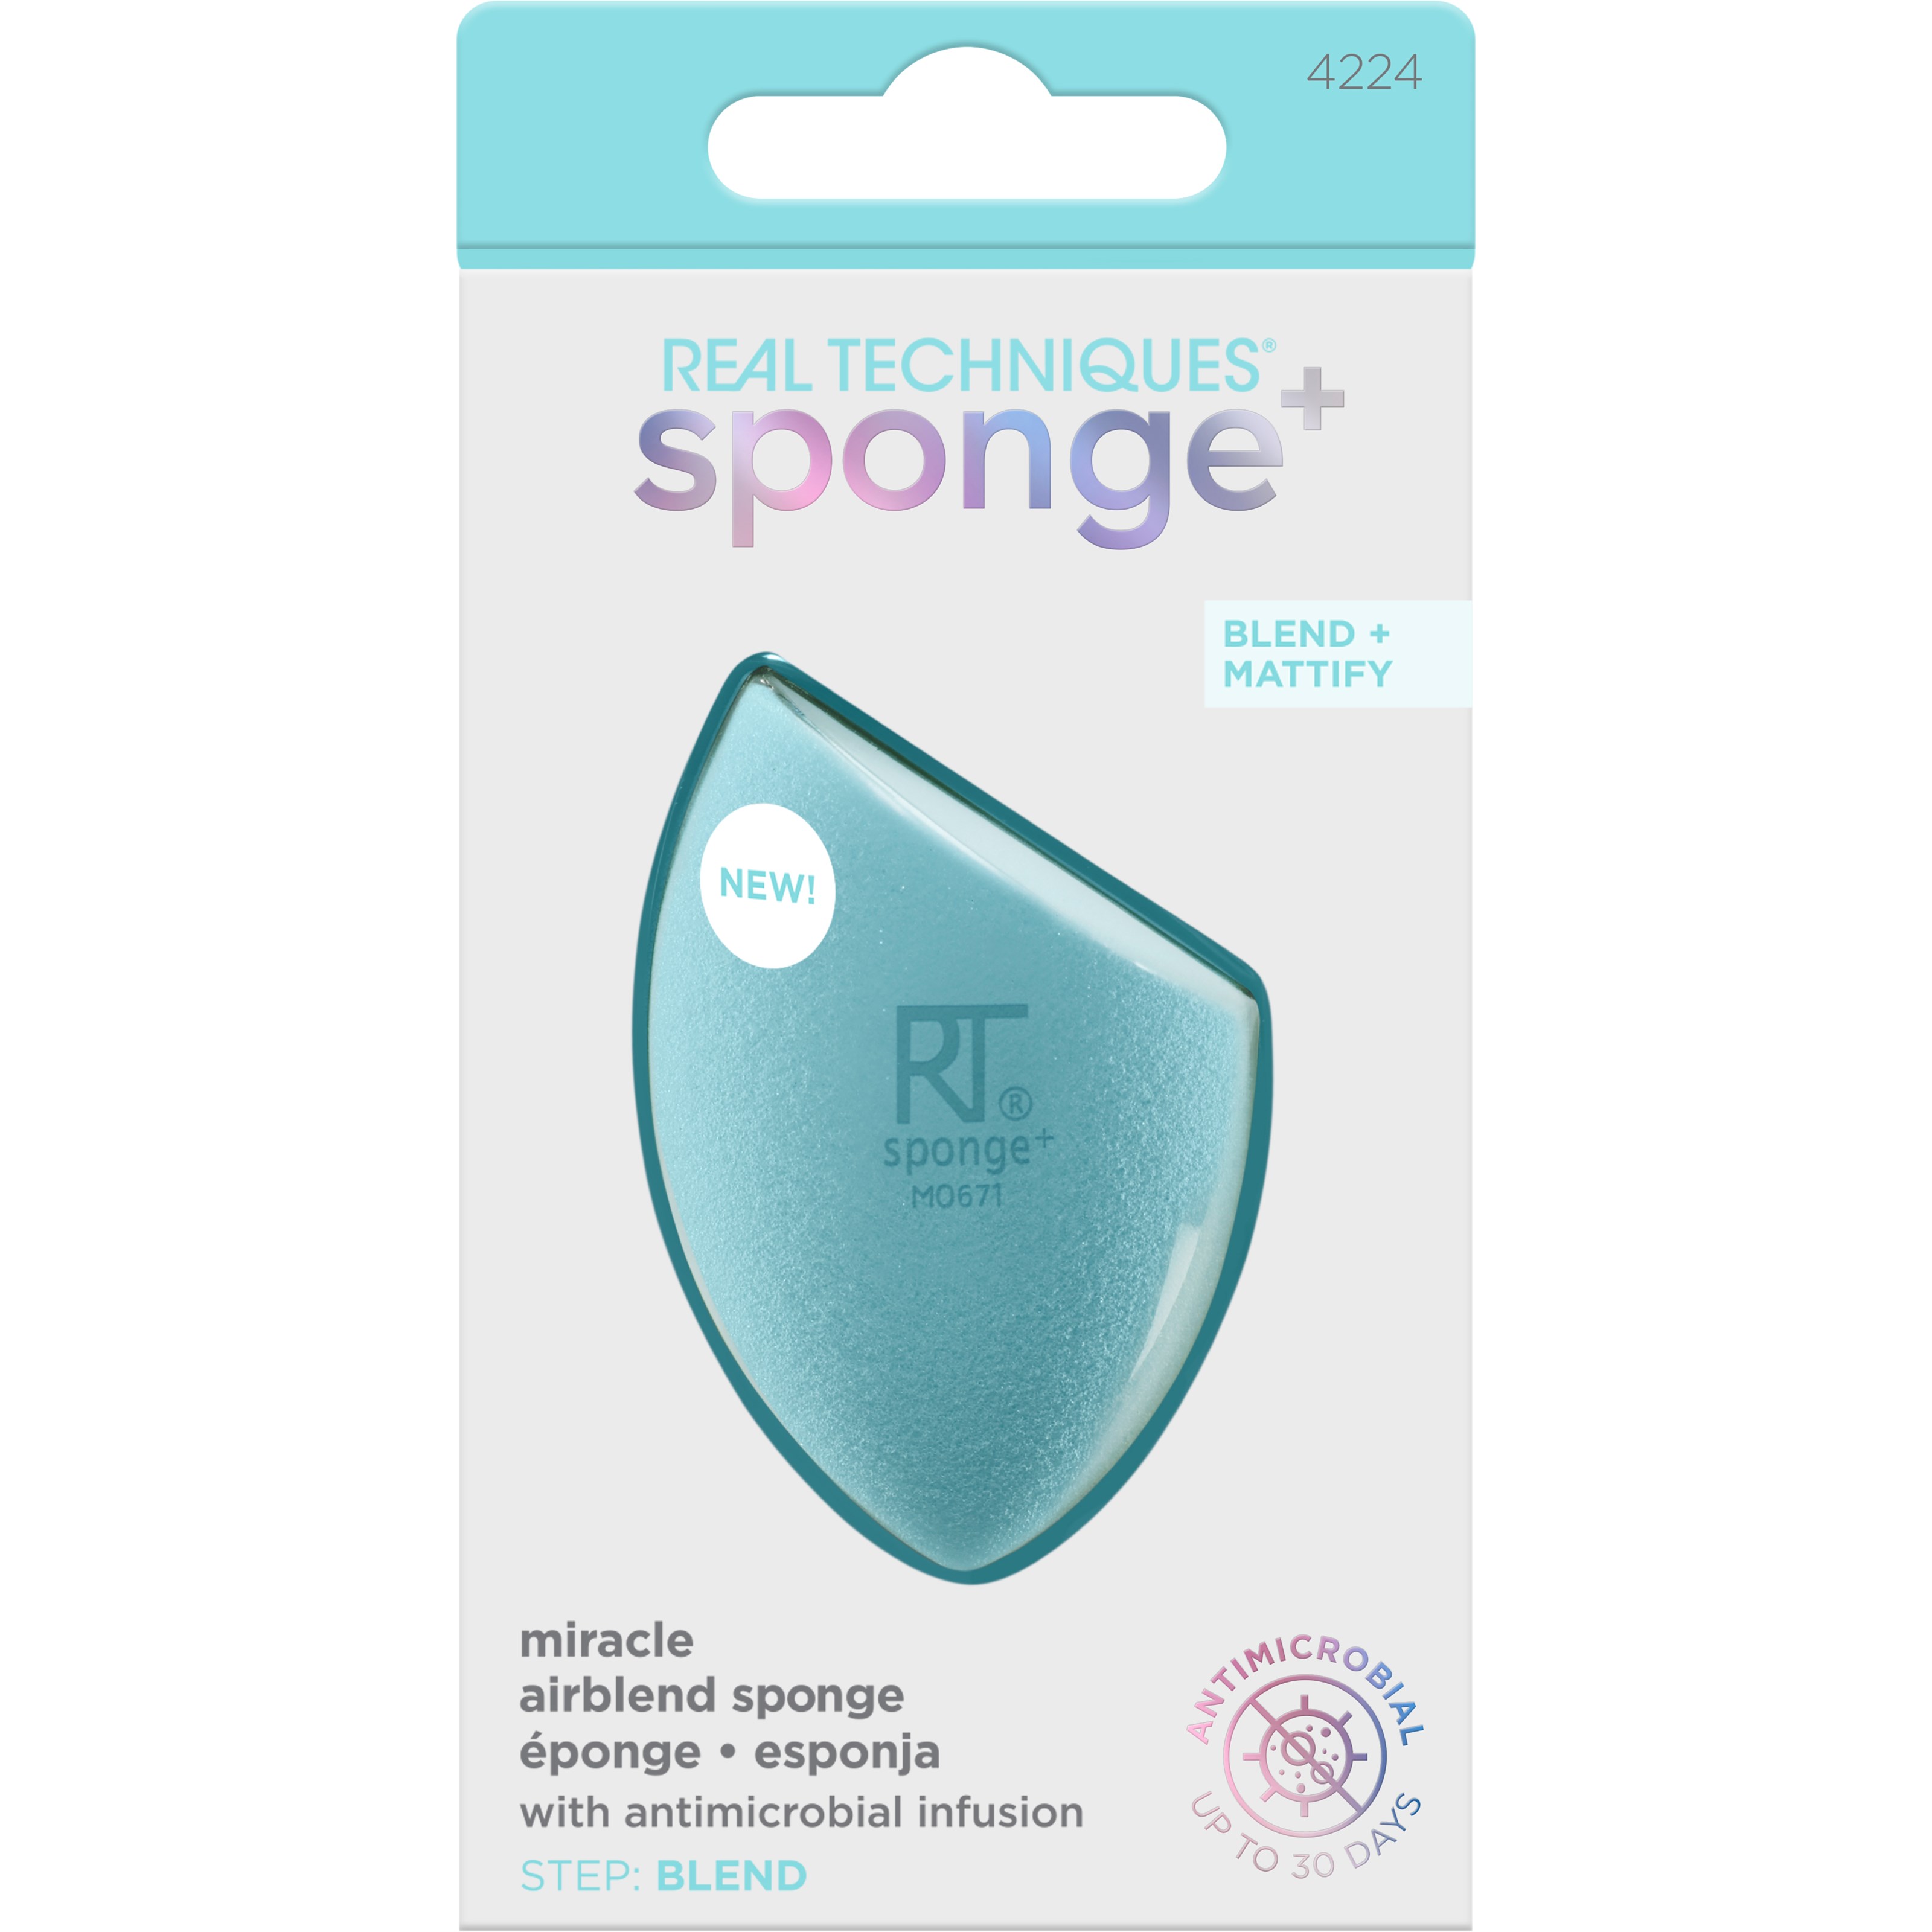 Real Techniques Sponge+ Miracle AirBlend Sponge